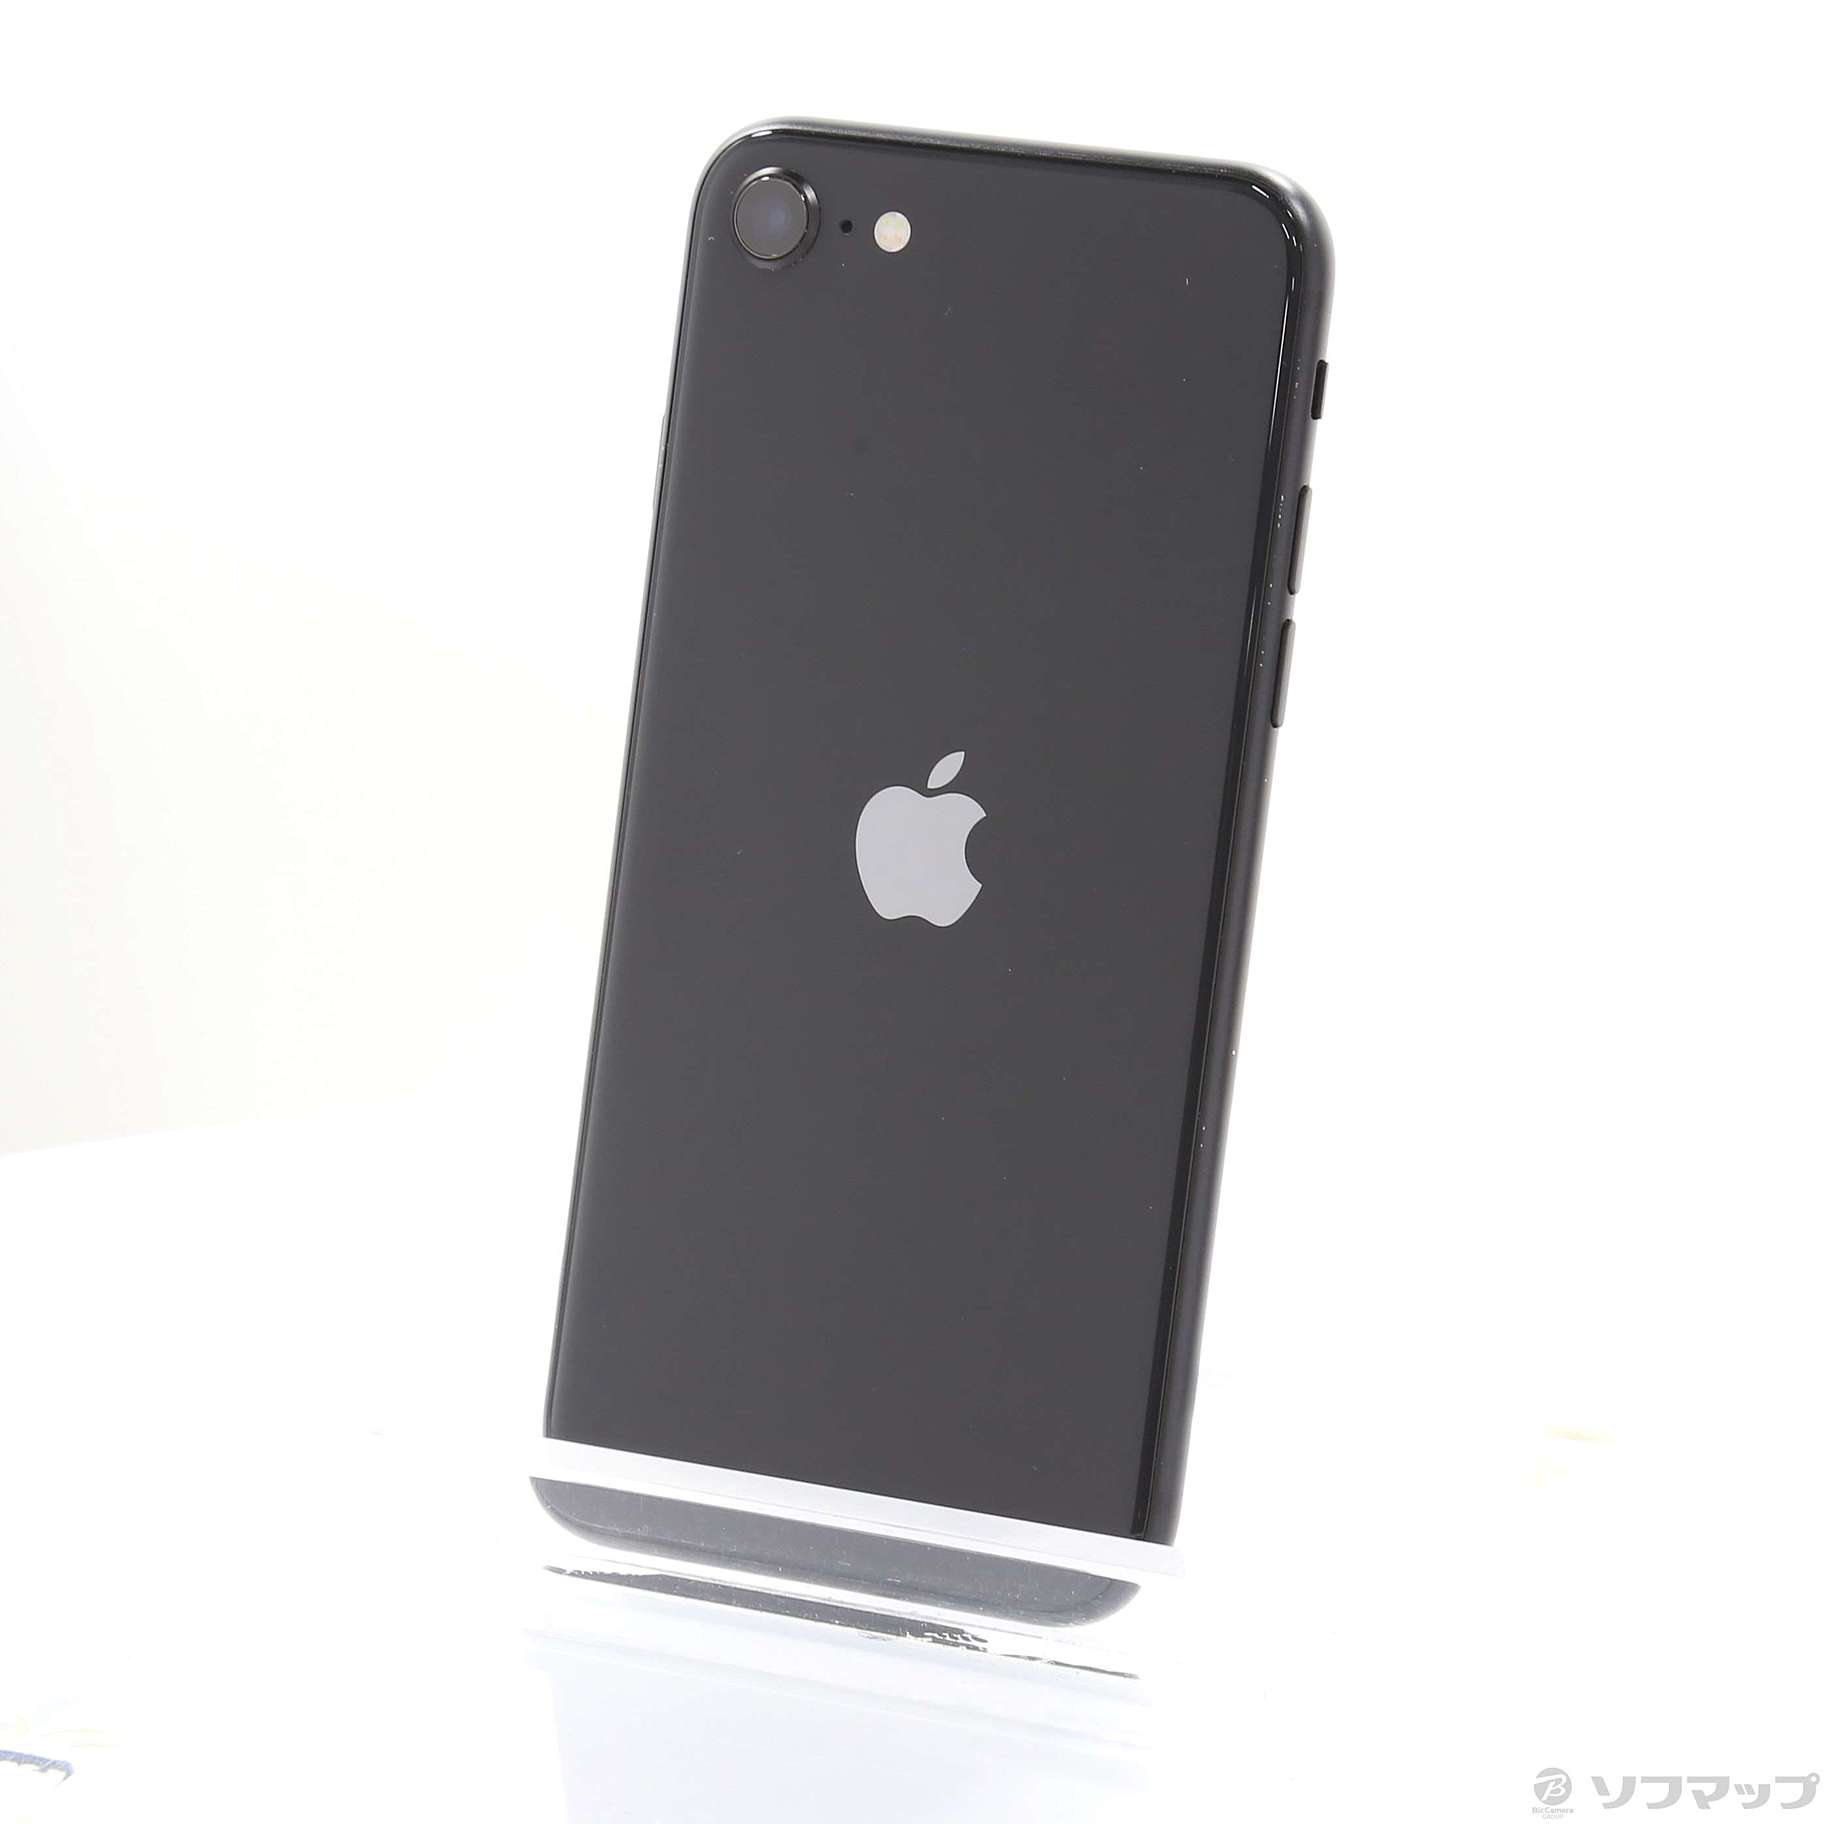 iPhone SE (第2世代) 64GB SoftBank [ブラック] 中古(白ロム)価格比較 